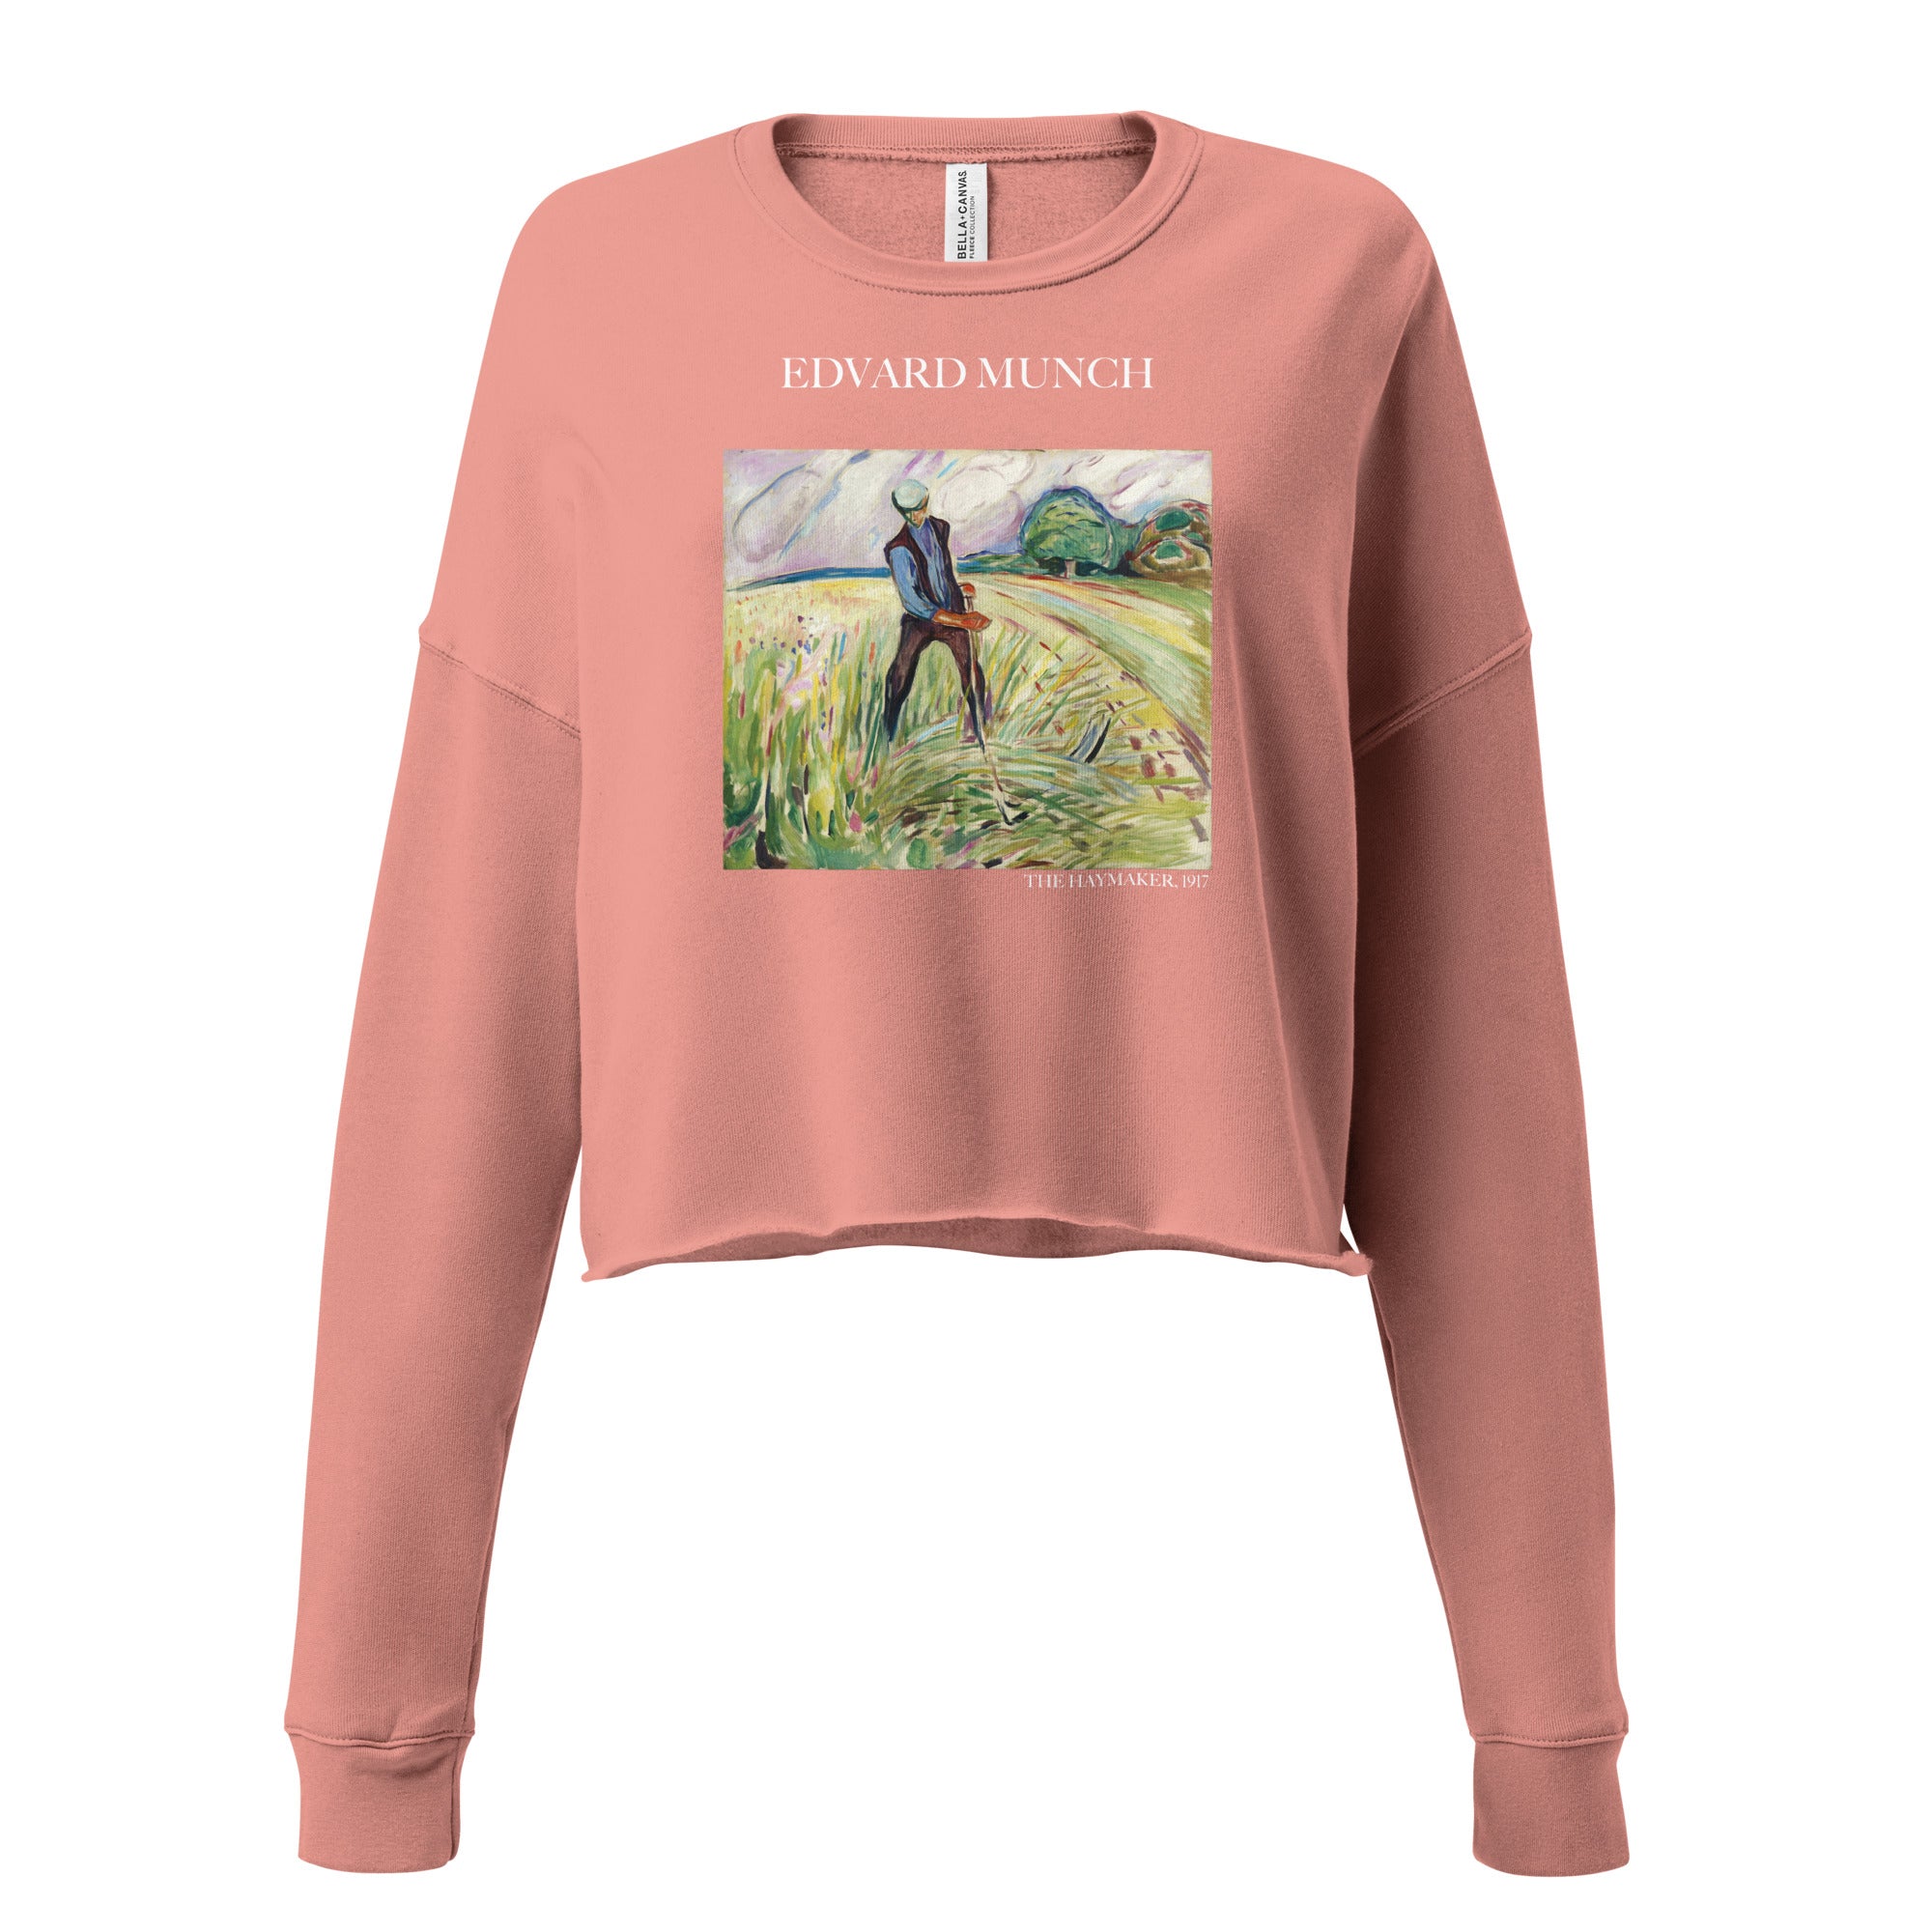 Edvard Munch 'The Haymaker' Famous Painting Cropped Sweatshirt | Premium Art Cropped Sweatshirt